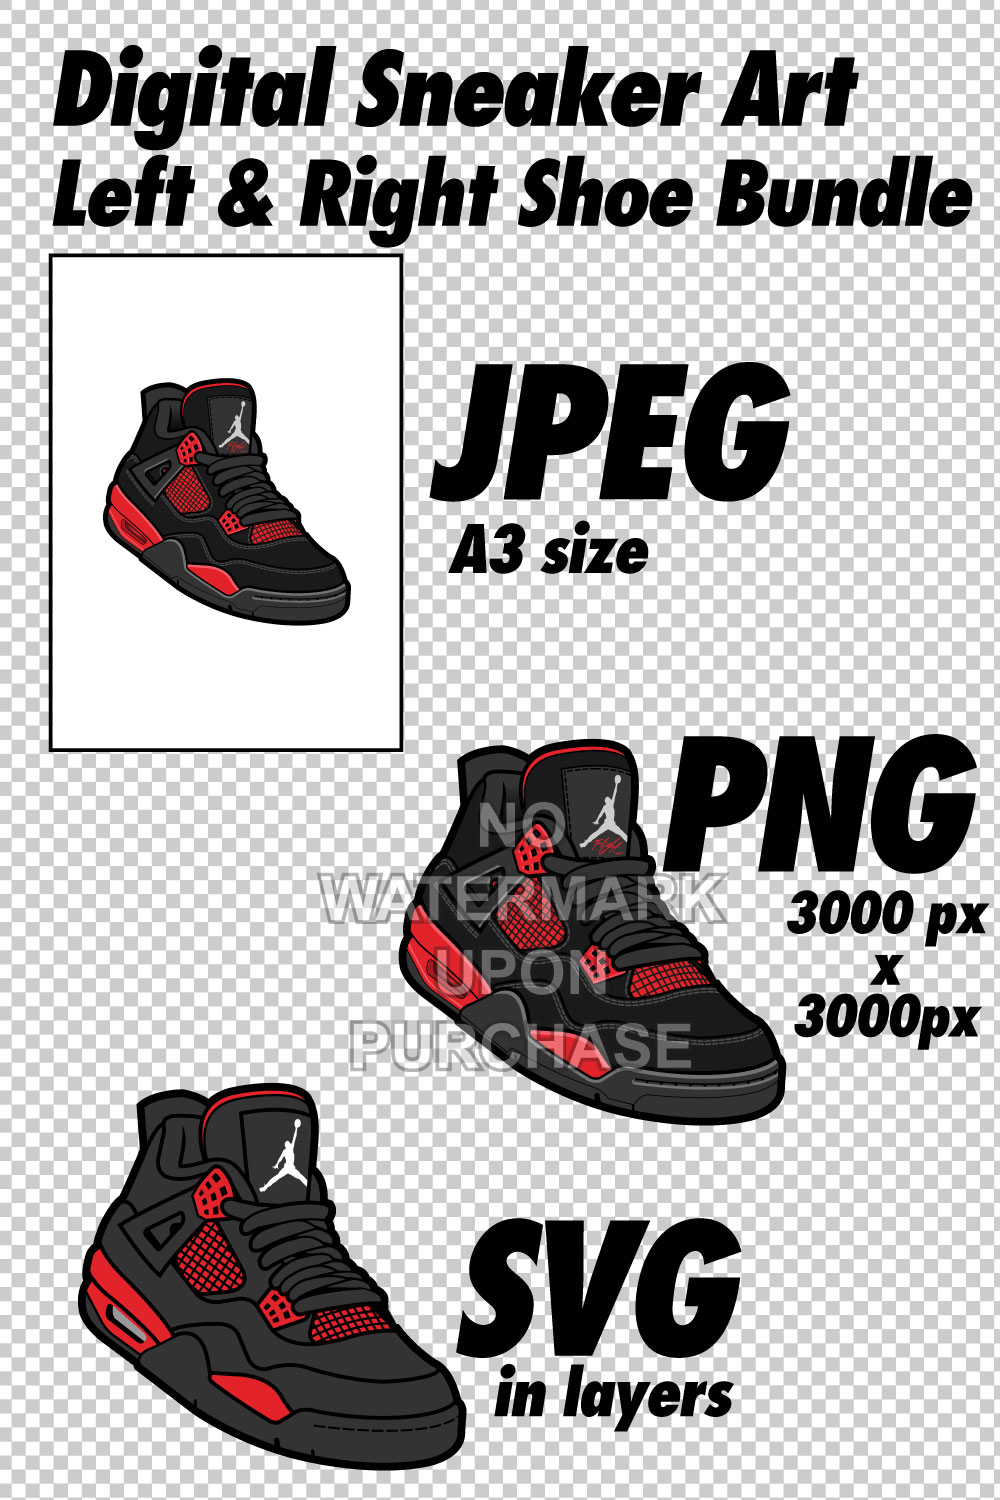 Air Jordan 4 Red Thunder JPEG PNG SVG Sneaker Art Right & Left shoe bundle with lace swap Digital Download pinterest preview image.